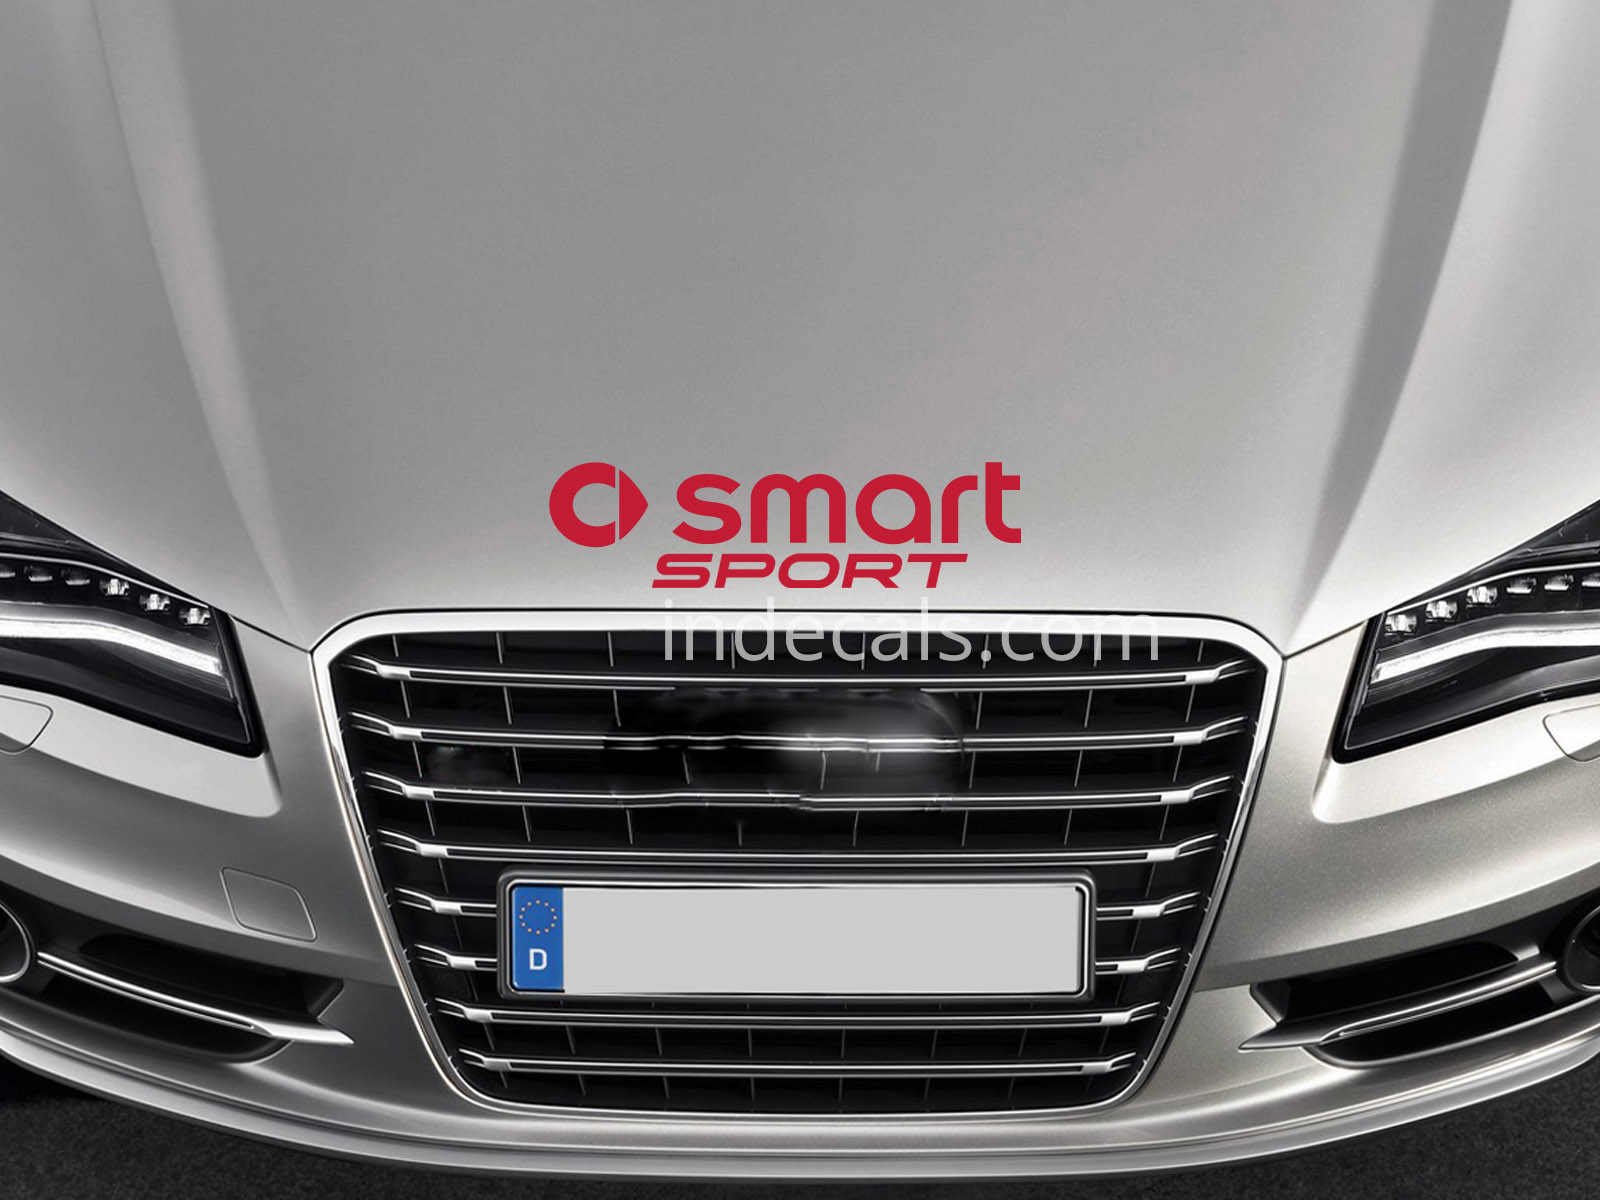 1 x Smart Sport Sticker for Bonnet - Red